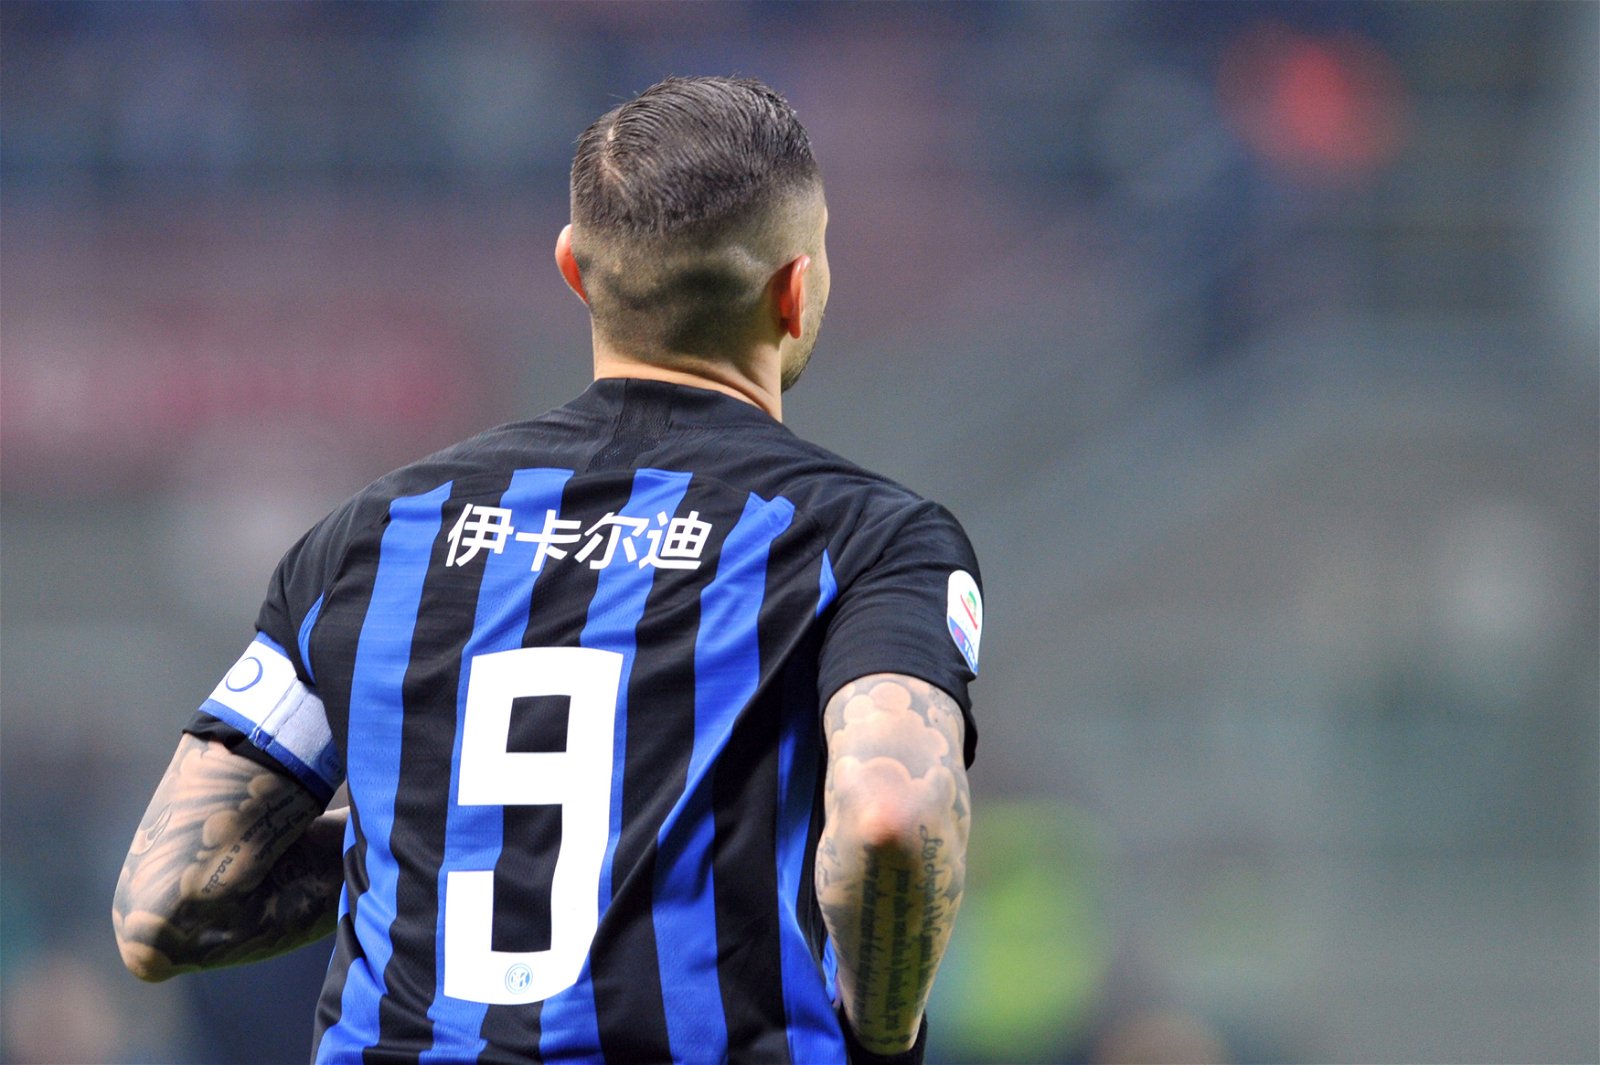 Inter snub captain Icardi and hand No. 9 jersey to Lukaku 1